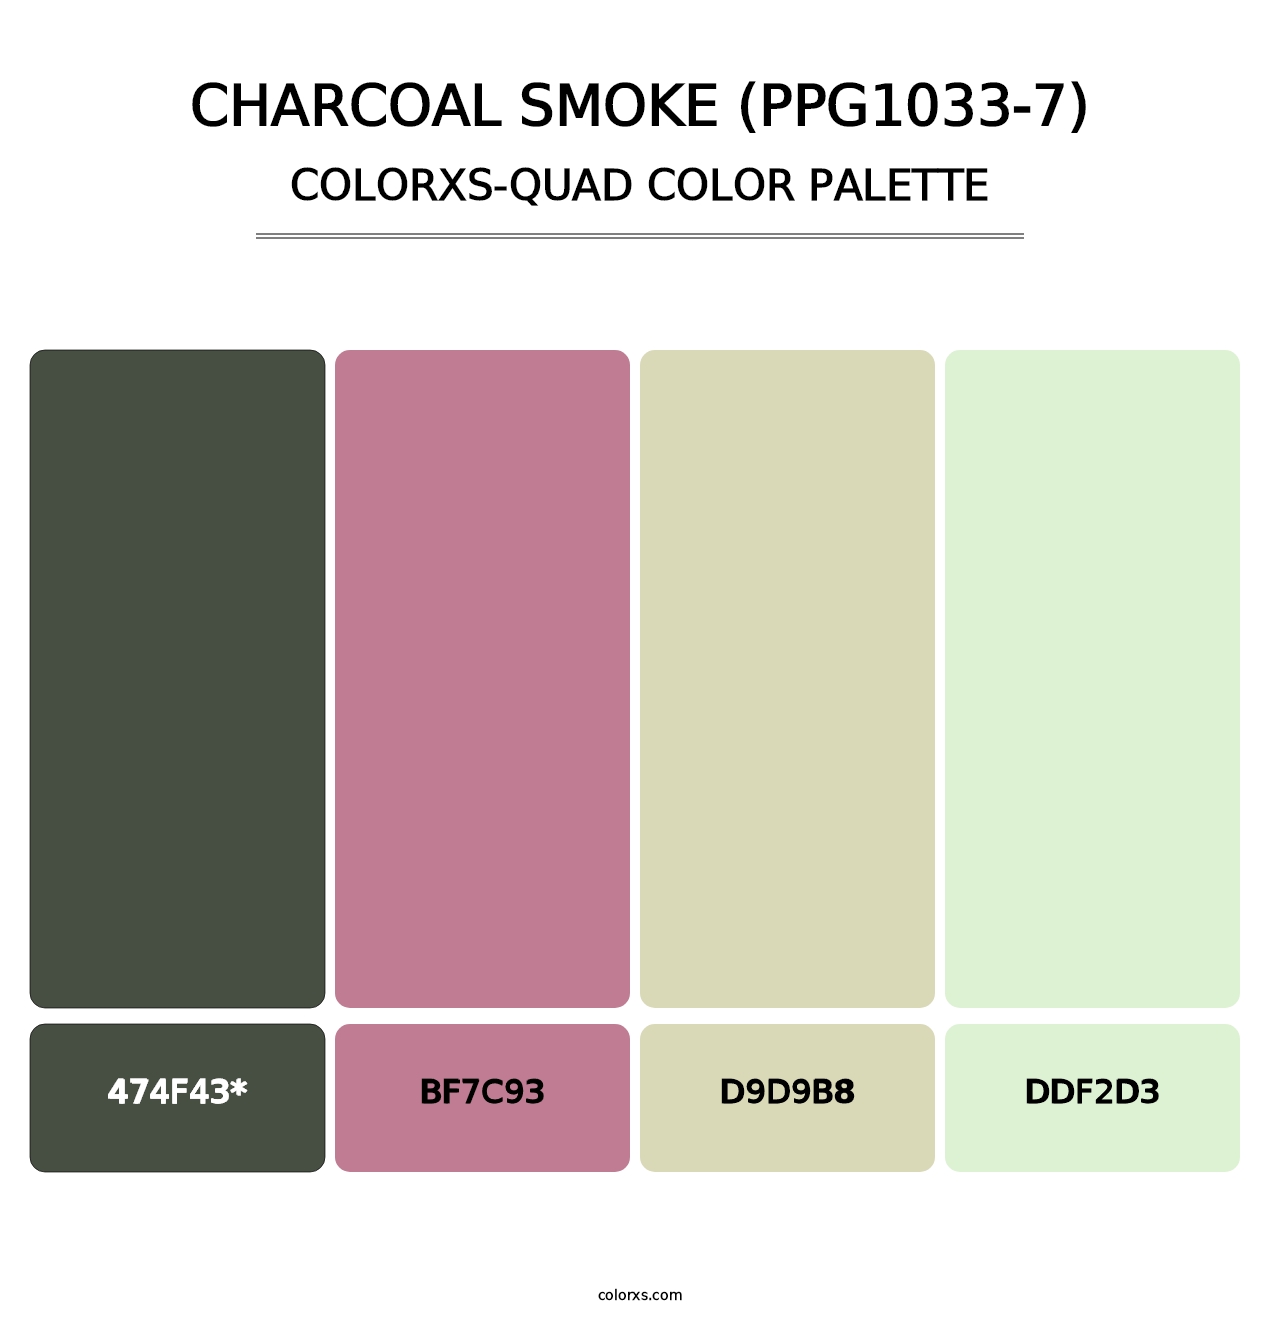 Charcoal Smoke (PPG1033-7) - Colorxs Quad Palette